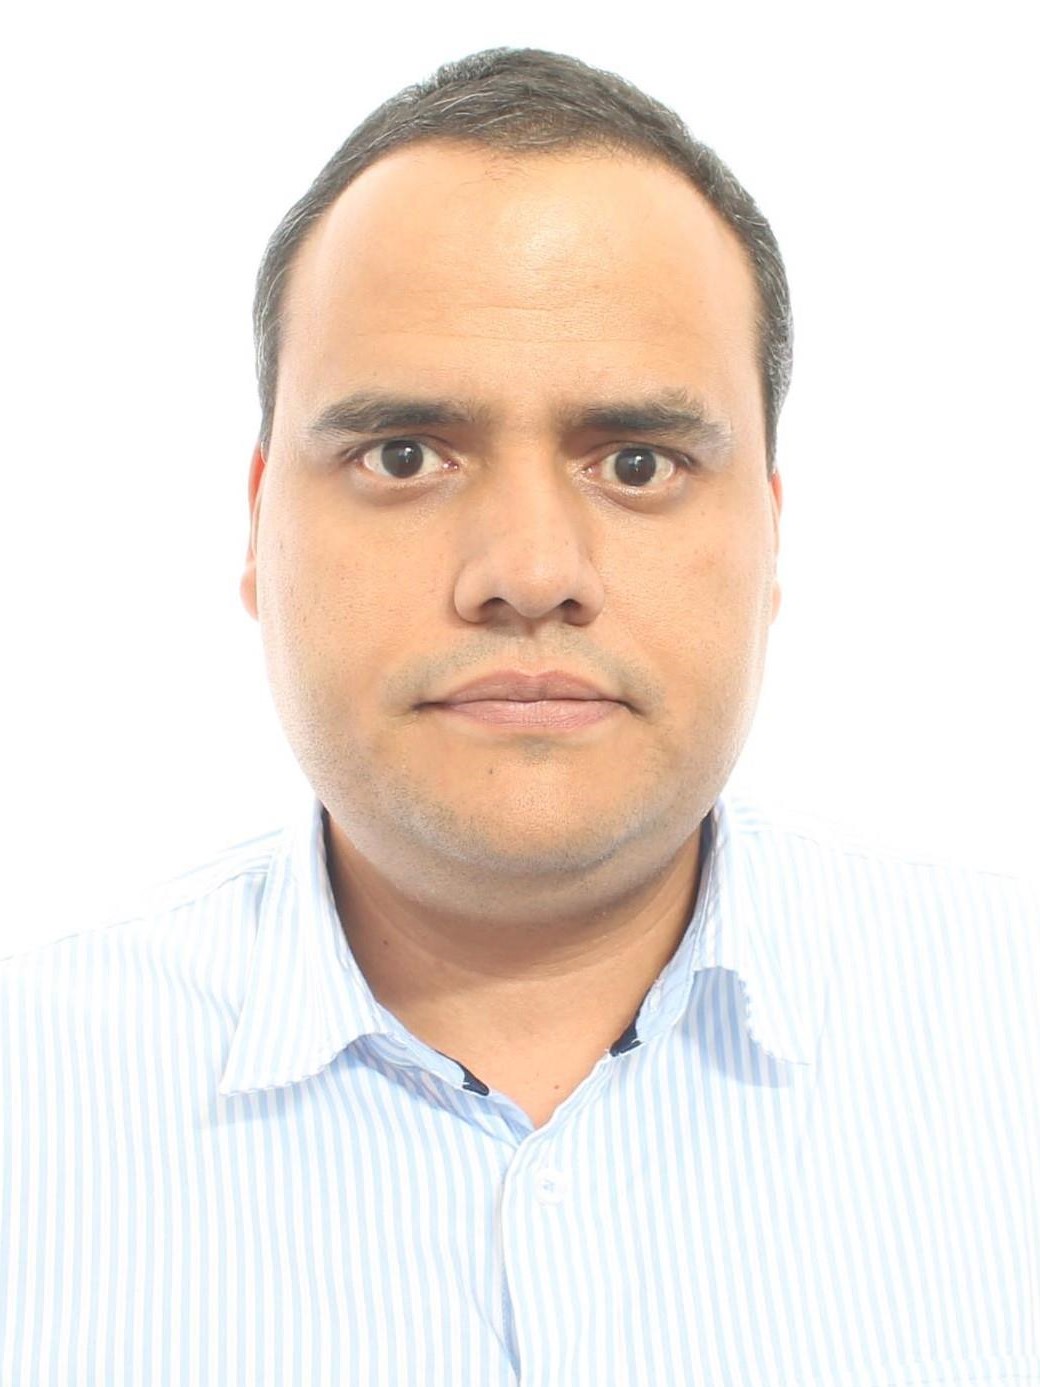 Foto de perfil del experto: santiago-correa-velez